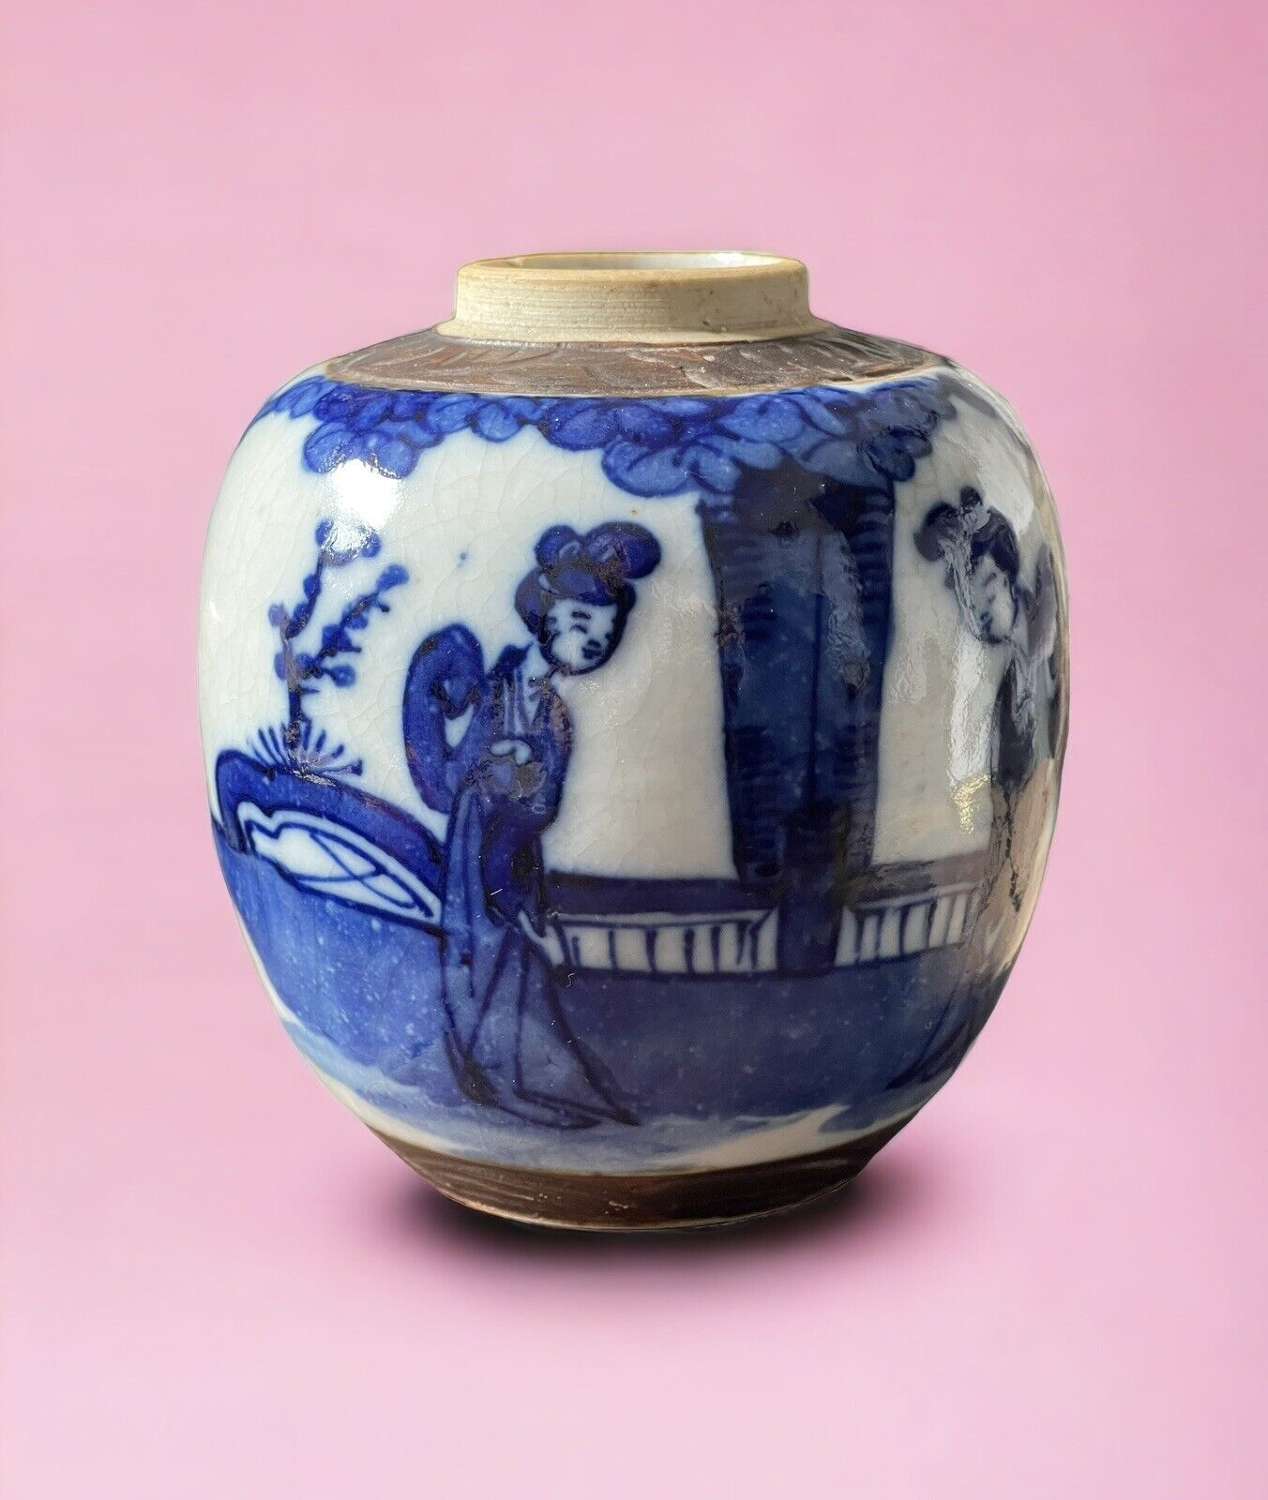 19TH Century blueand white ginger jar.